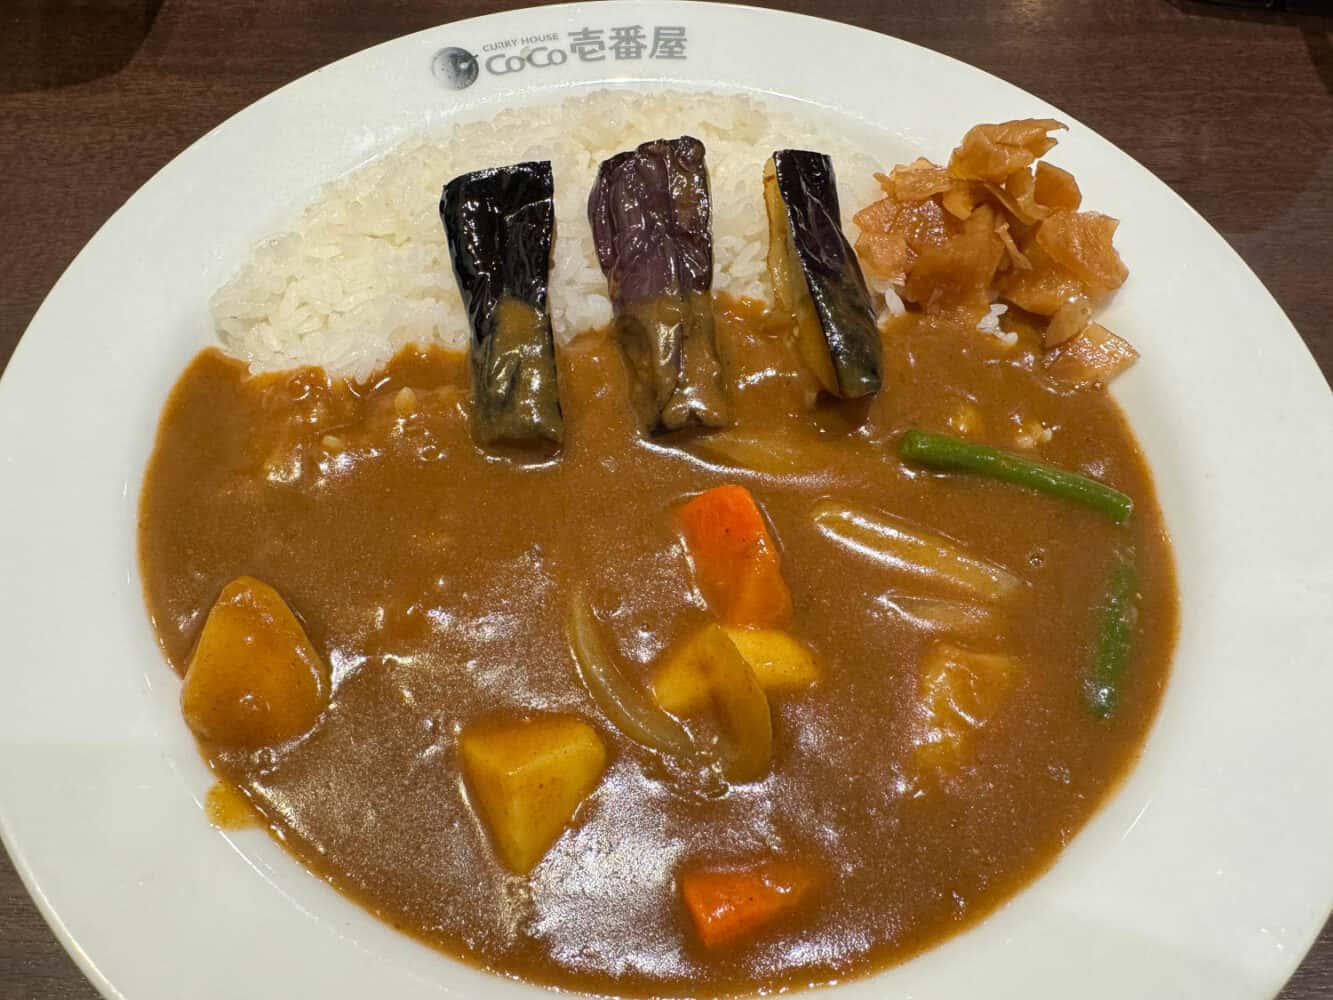 Vegetarian curry at Coco Ichibanya in Japan